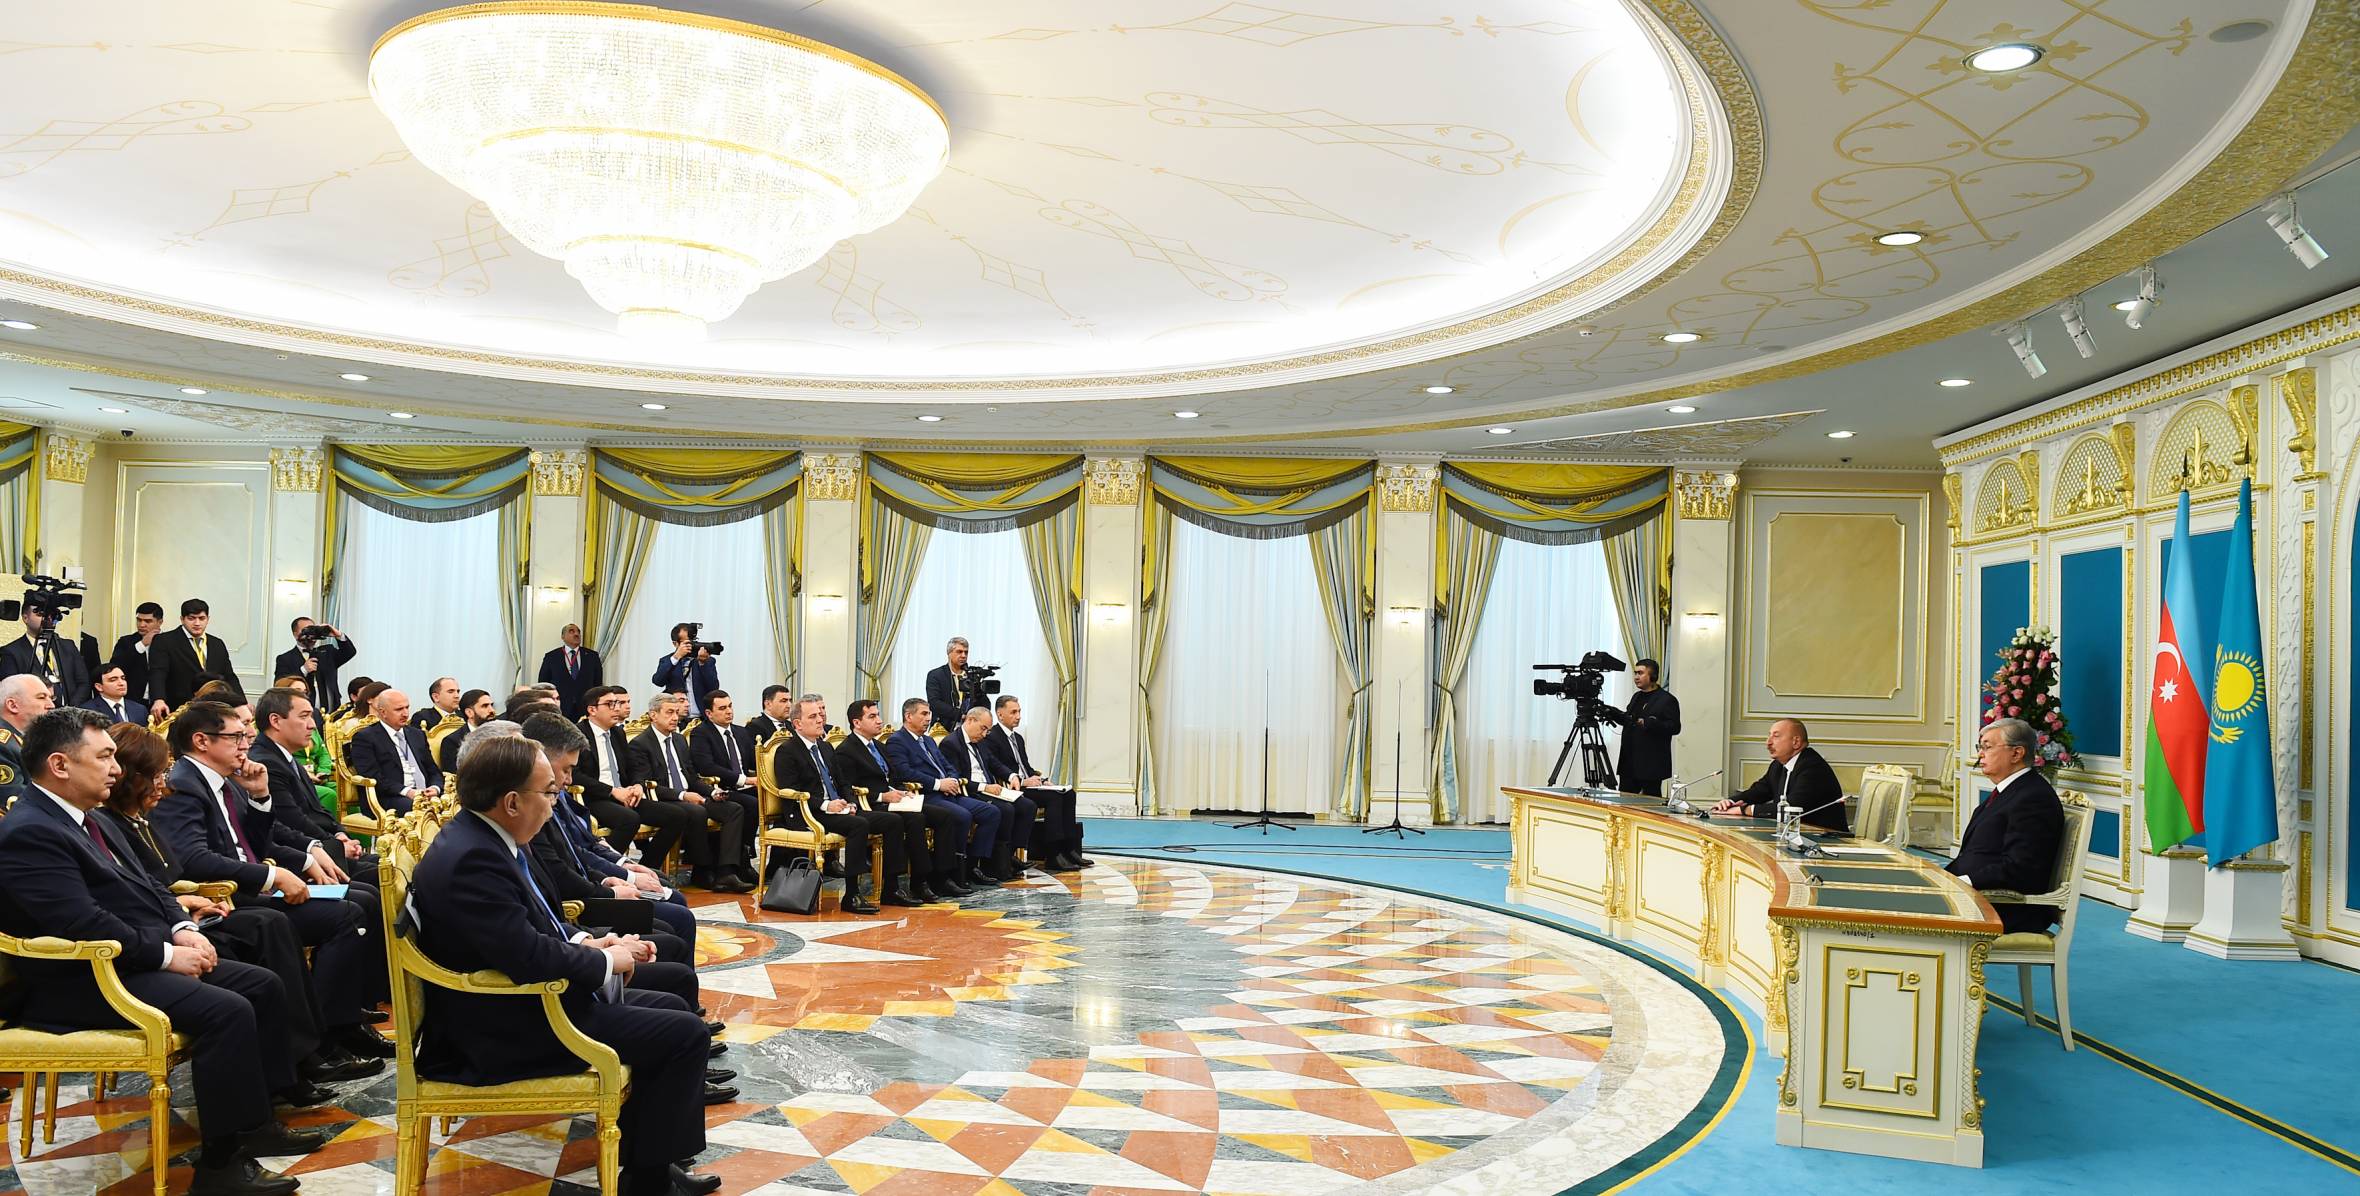 Presidents of Azerbaijan and Kazakhstan made press statements